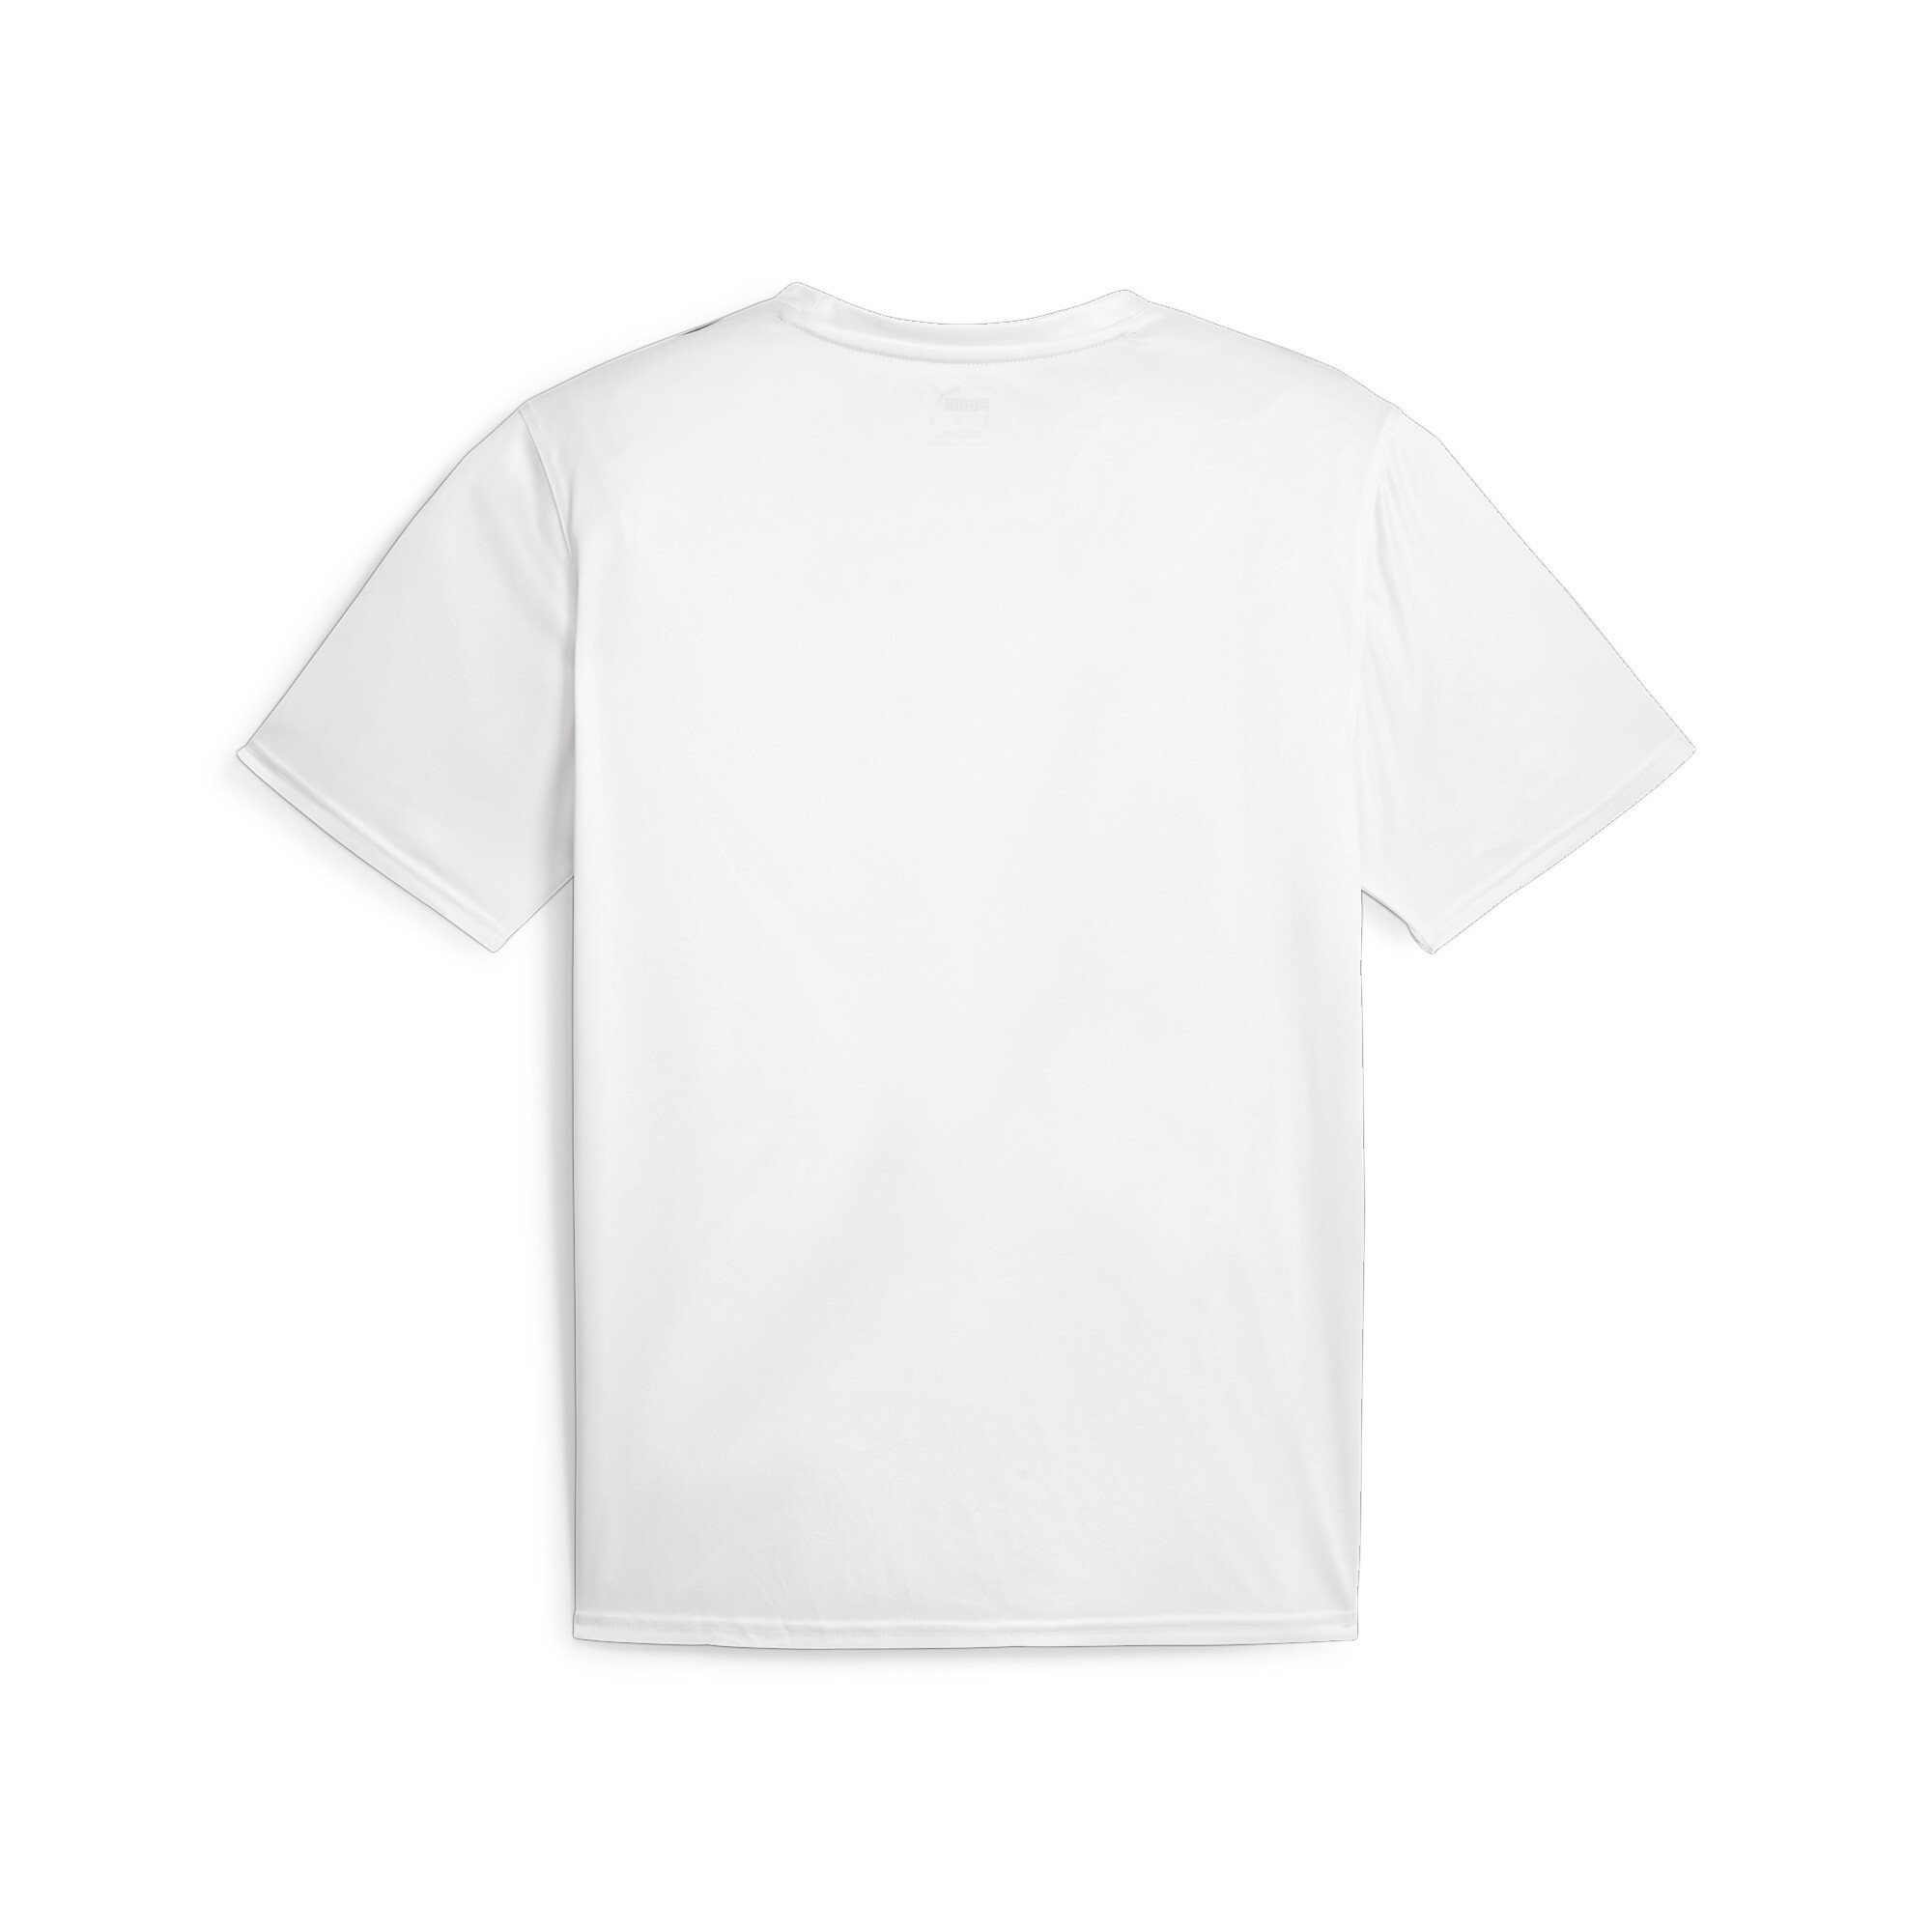 Men's Puma FIT's Taped Training T-Shirt, White, Size M, Clothing